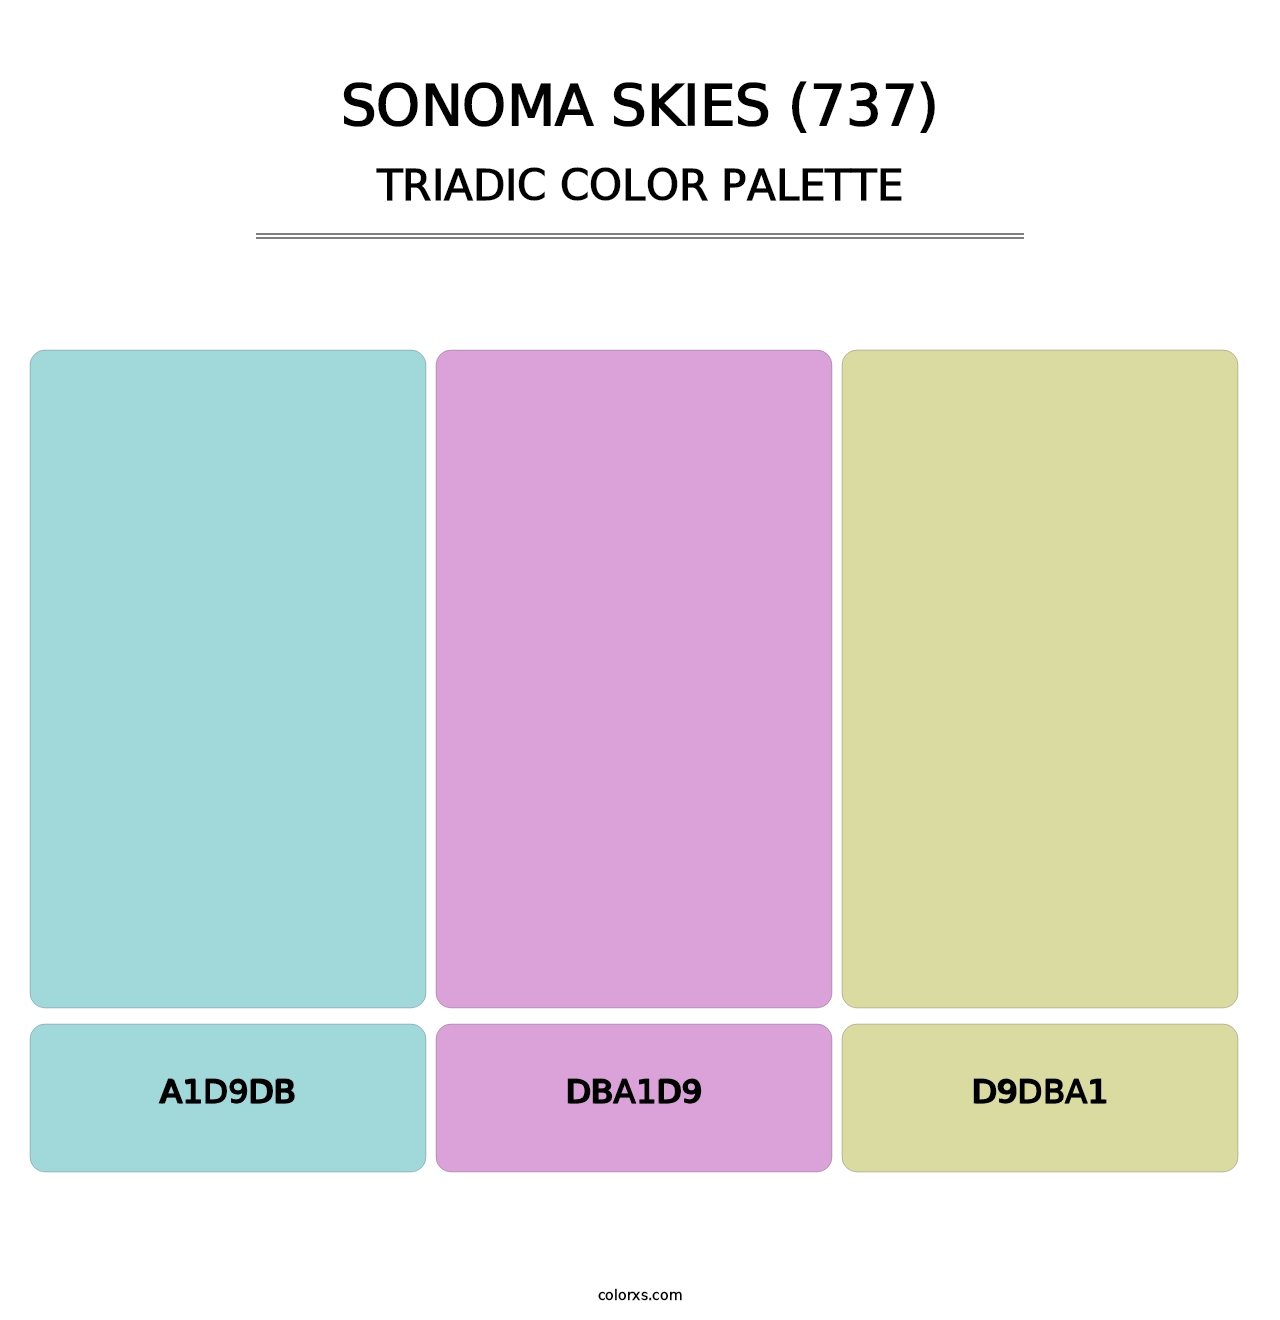 Sonoma Skies (737) - Triadic Color Palette